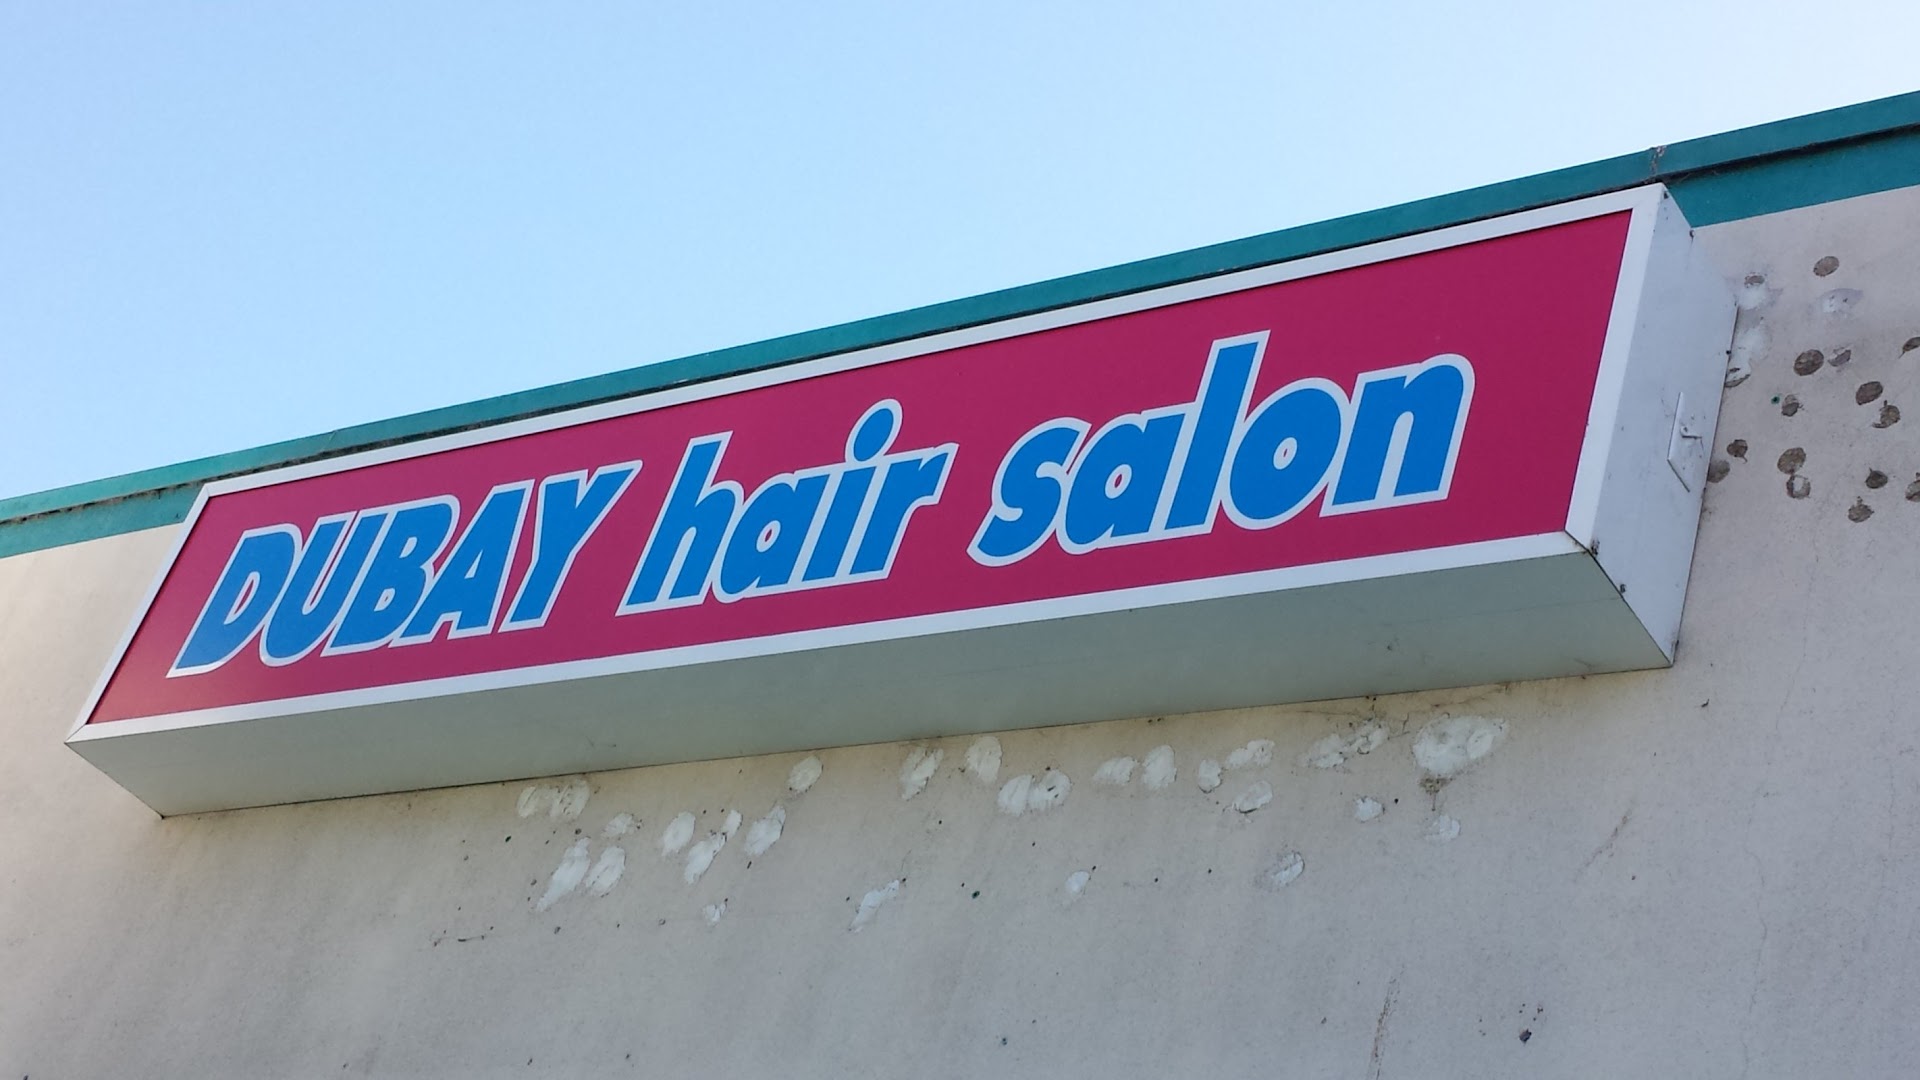 Dubay Hair Salon